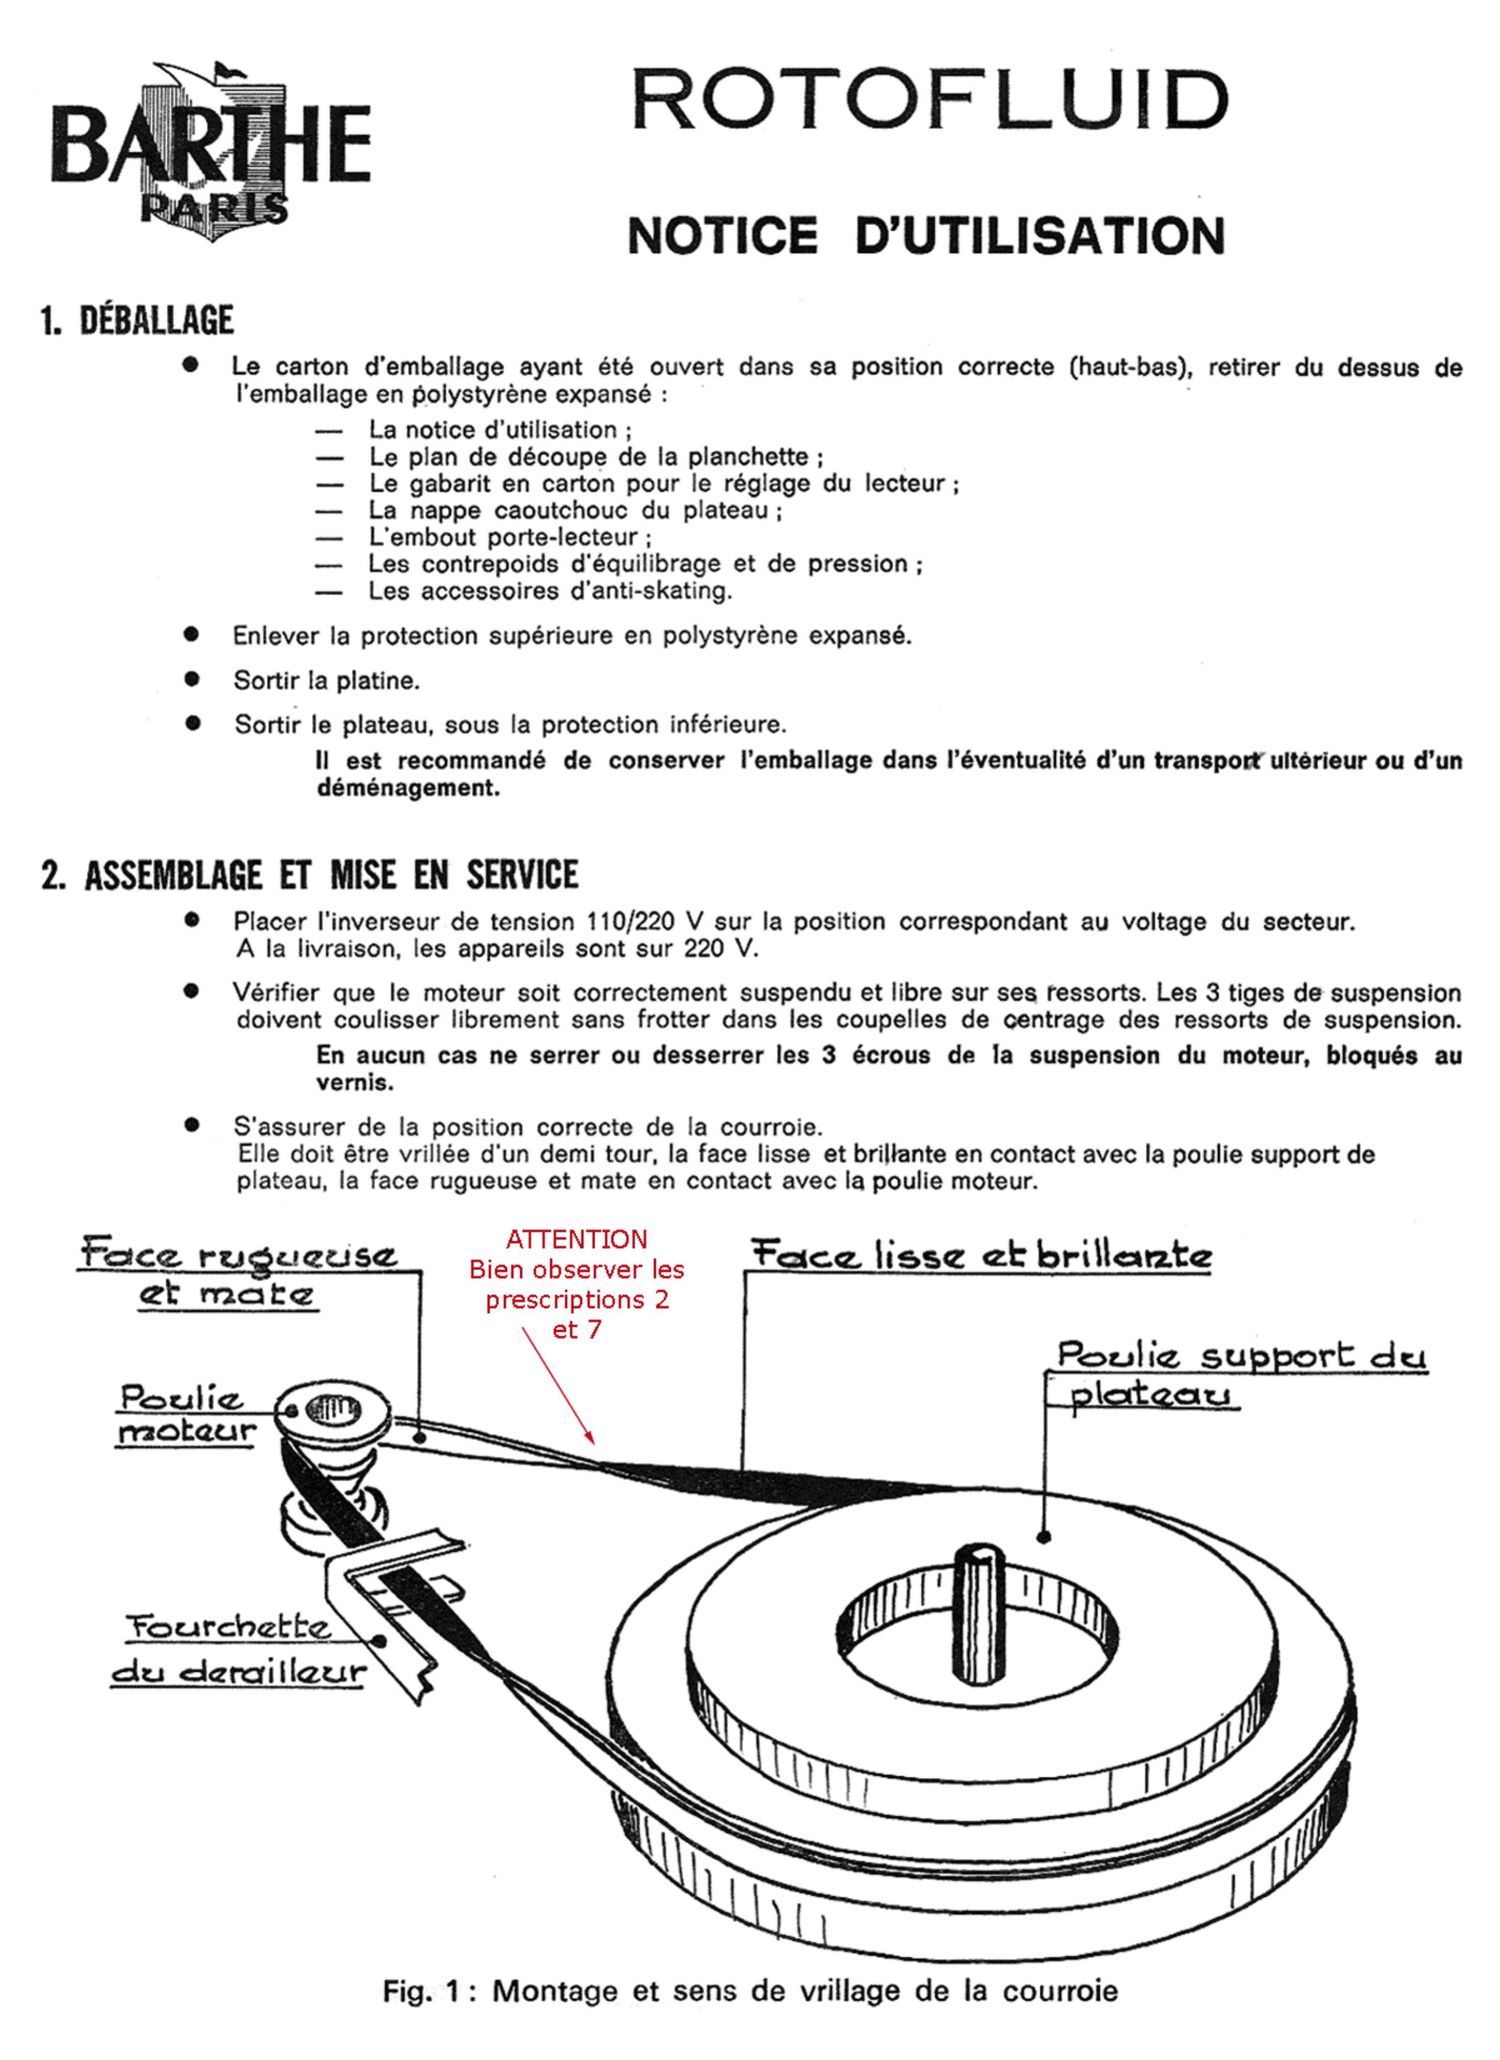 Barthe Rotofluid Owners Manual